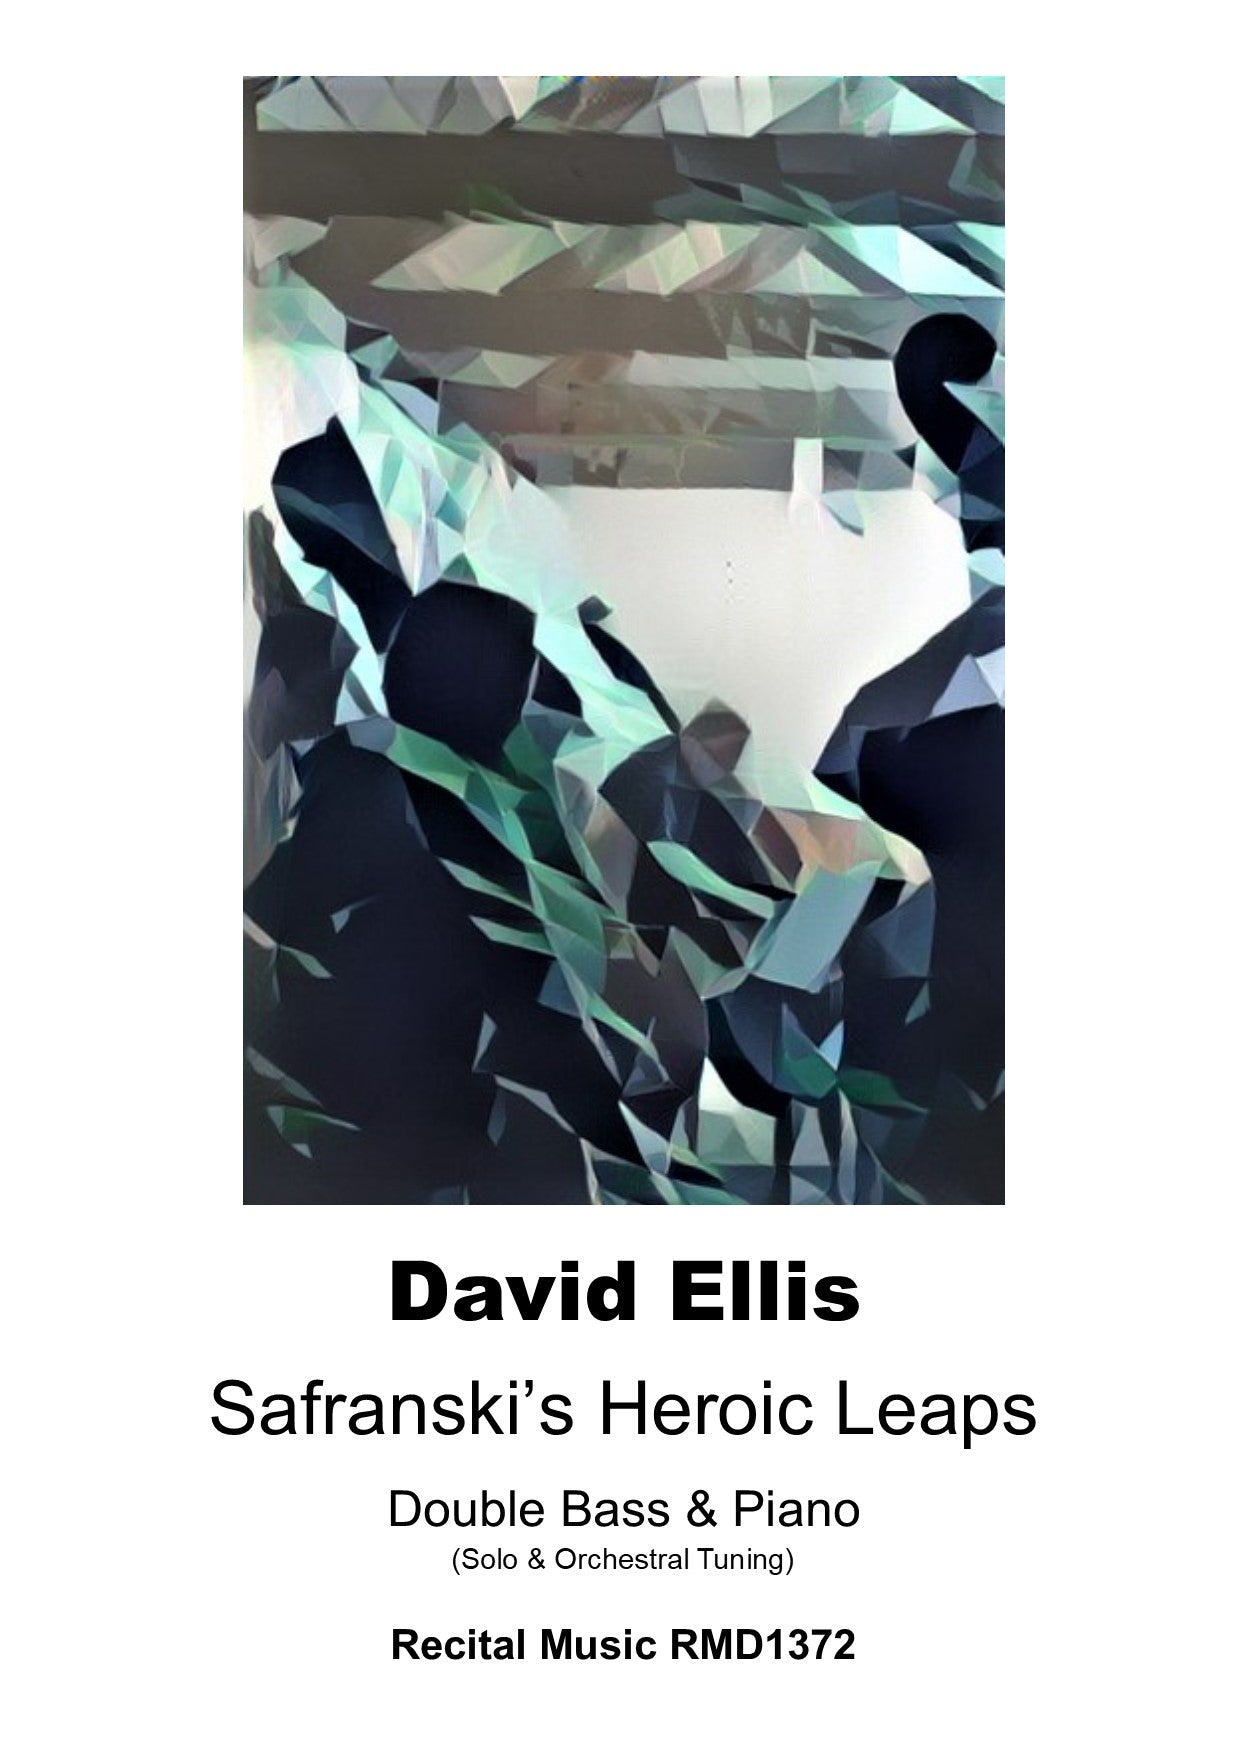 David Ellis: Safranski's Heroic Leaps for double bass & piano